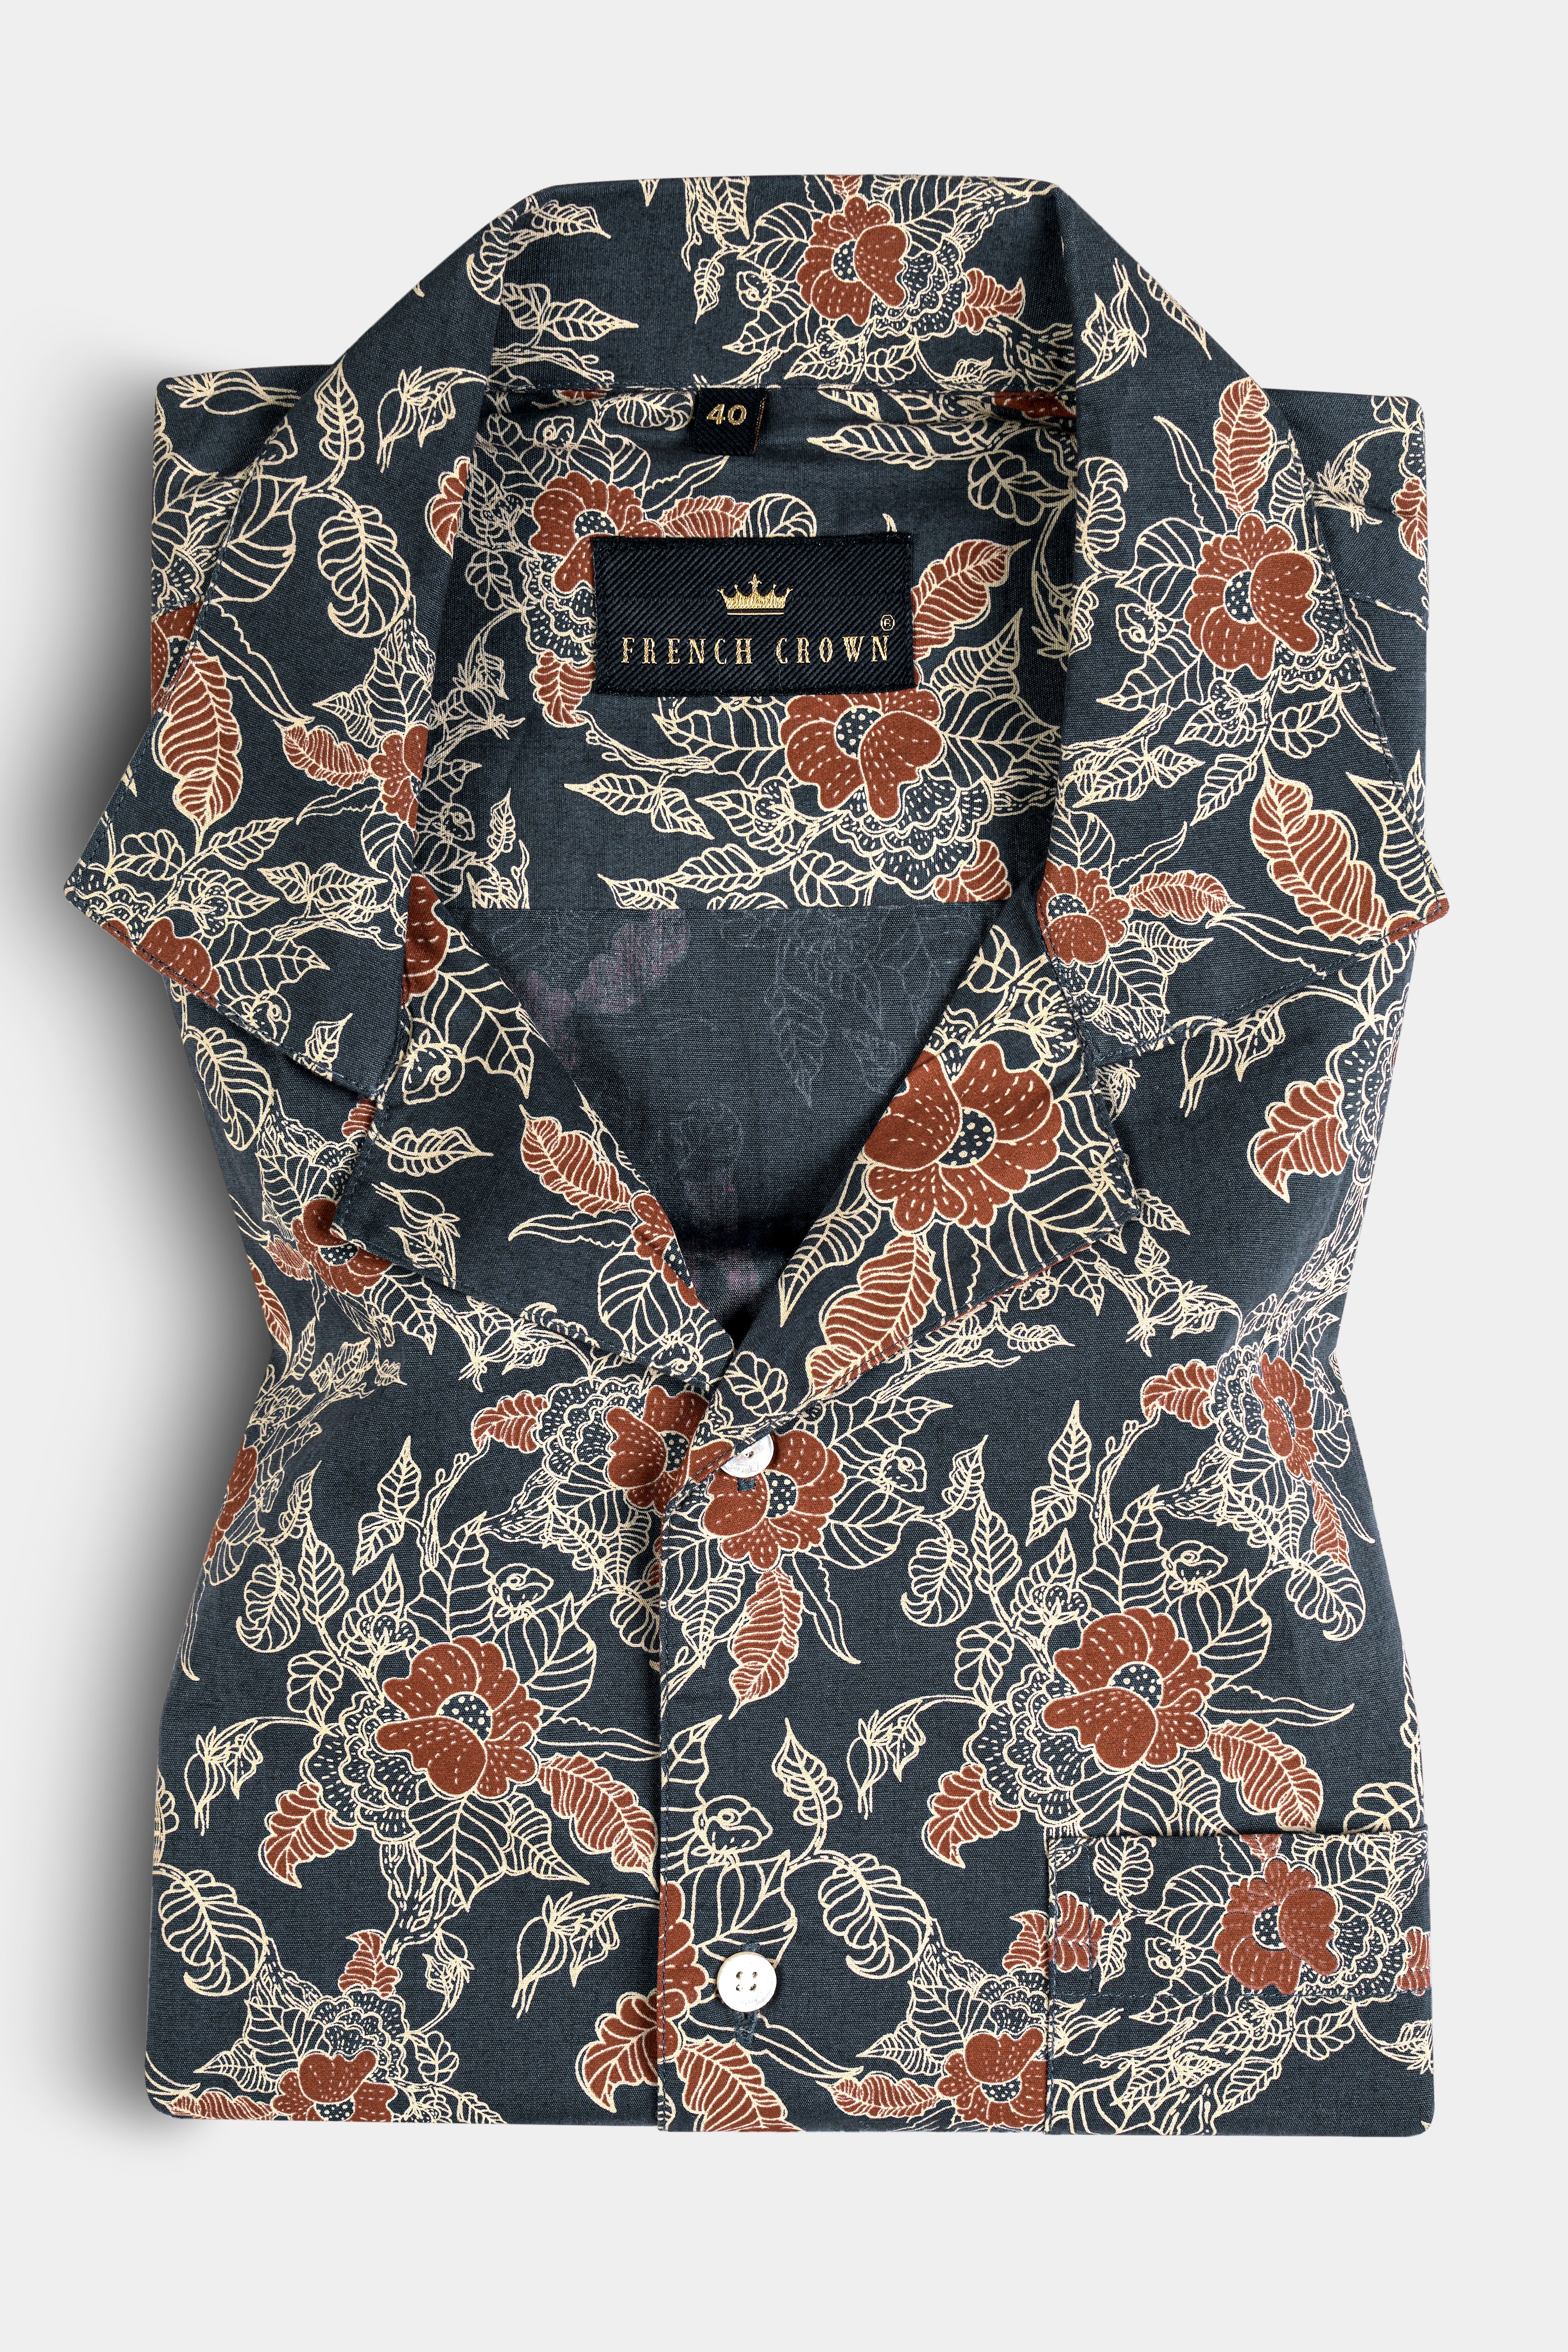 Iridium Gray Floral Printed Premium Cotton Shirt